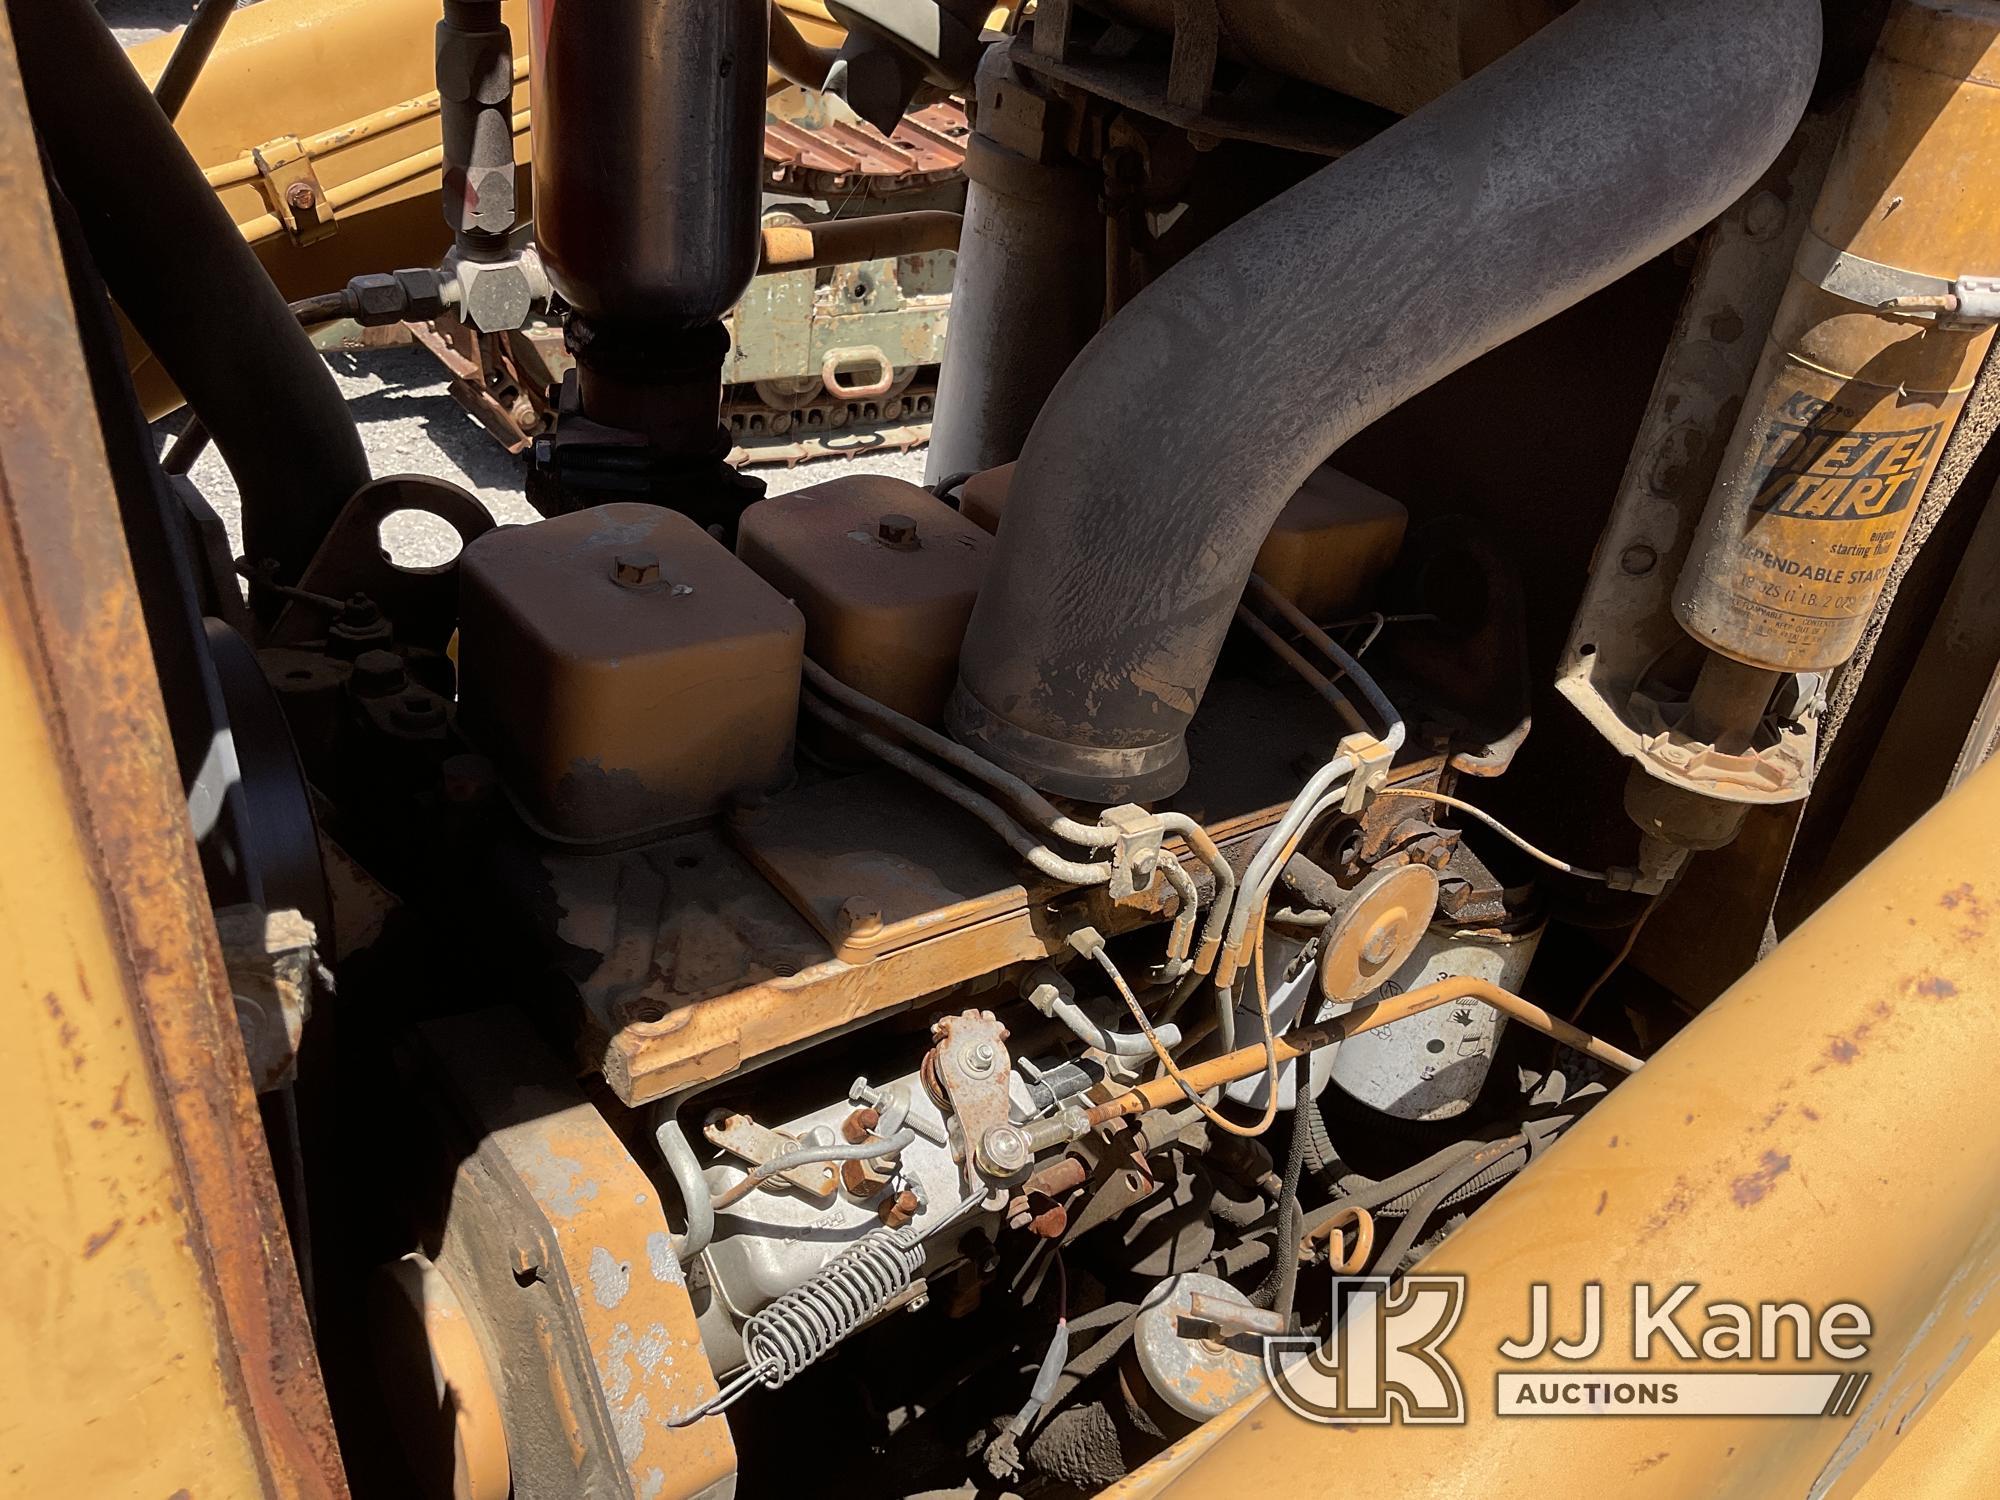 (Jurupa Valley, CA) 1989 Case Tractor Utility Tractor Loader Runs & Moves